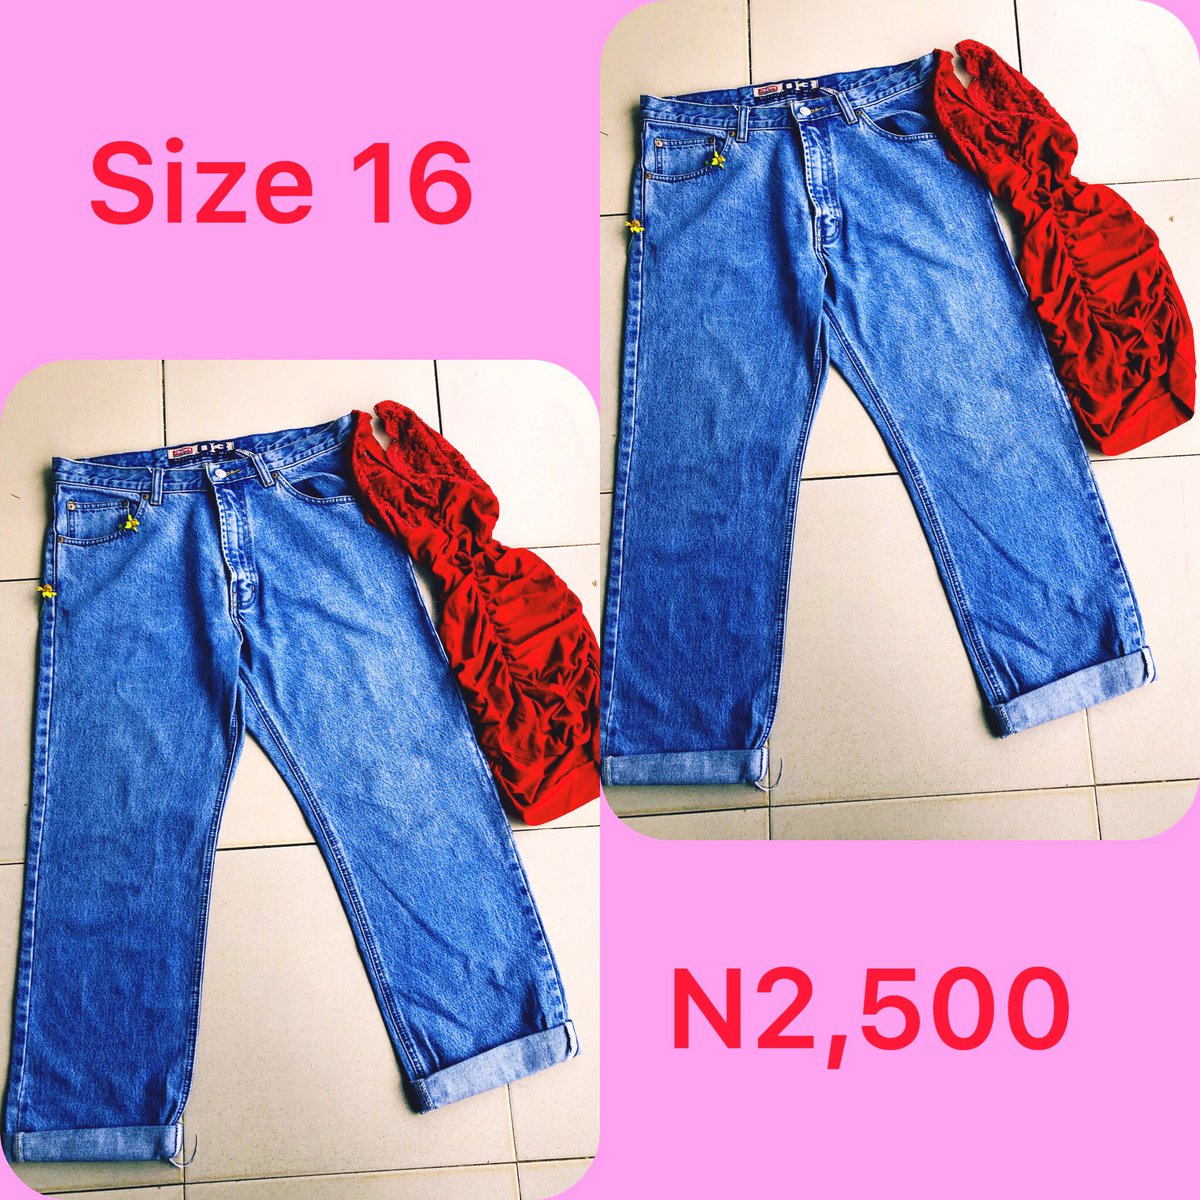 Slide 1: bf jeans      Size 18, N2,500Slide 2: bf jeans       Size 8/10, Price: N2,500Slide 3: bf jeans       Size 16, Price: N2,500Slide 4: bf jeans       Size 12/14, Price N2,500